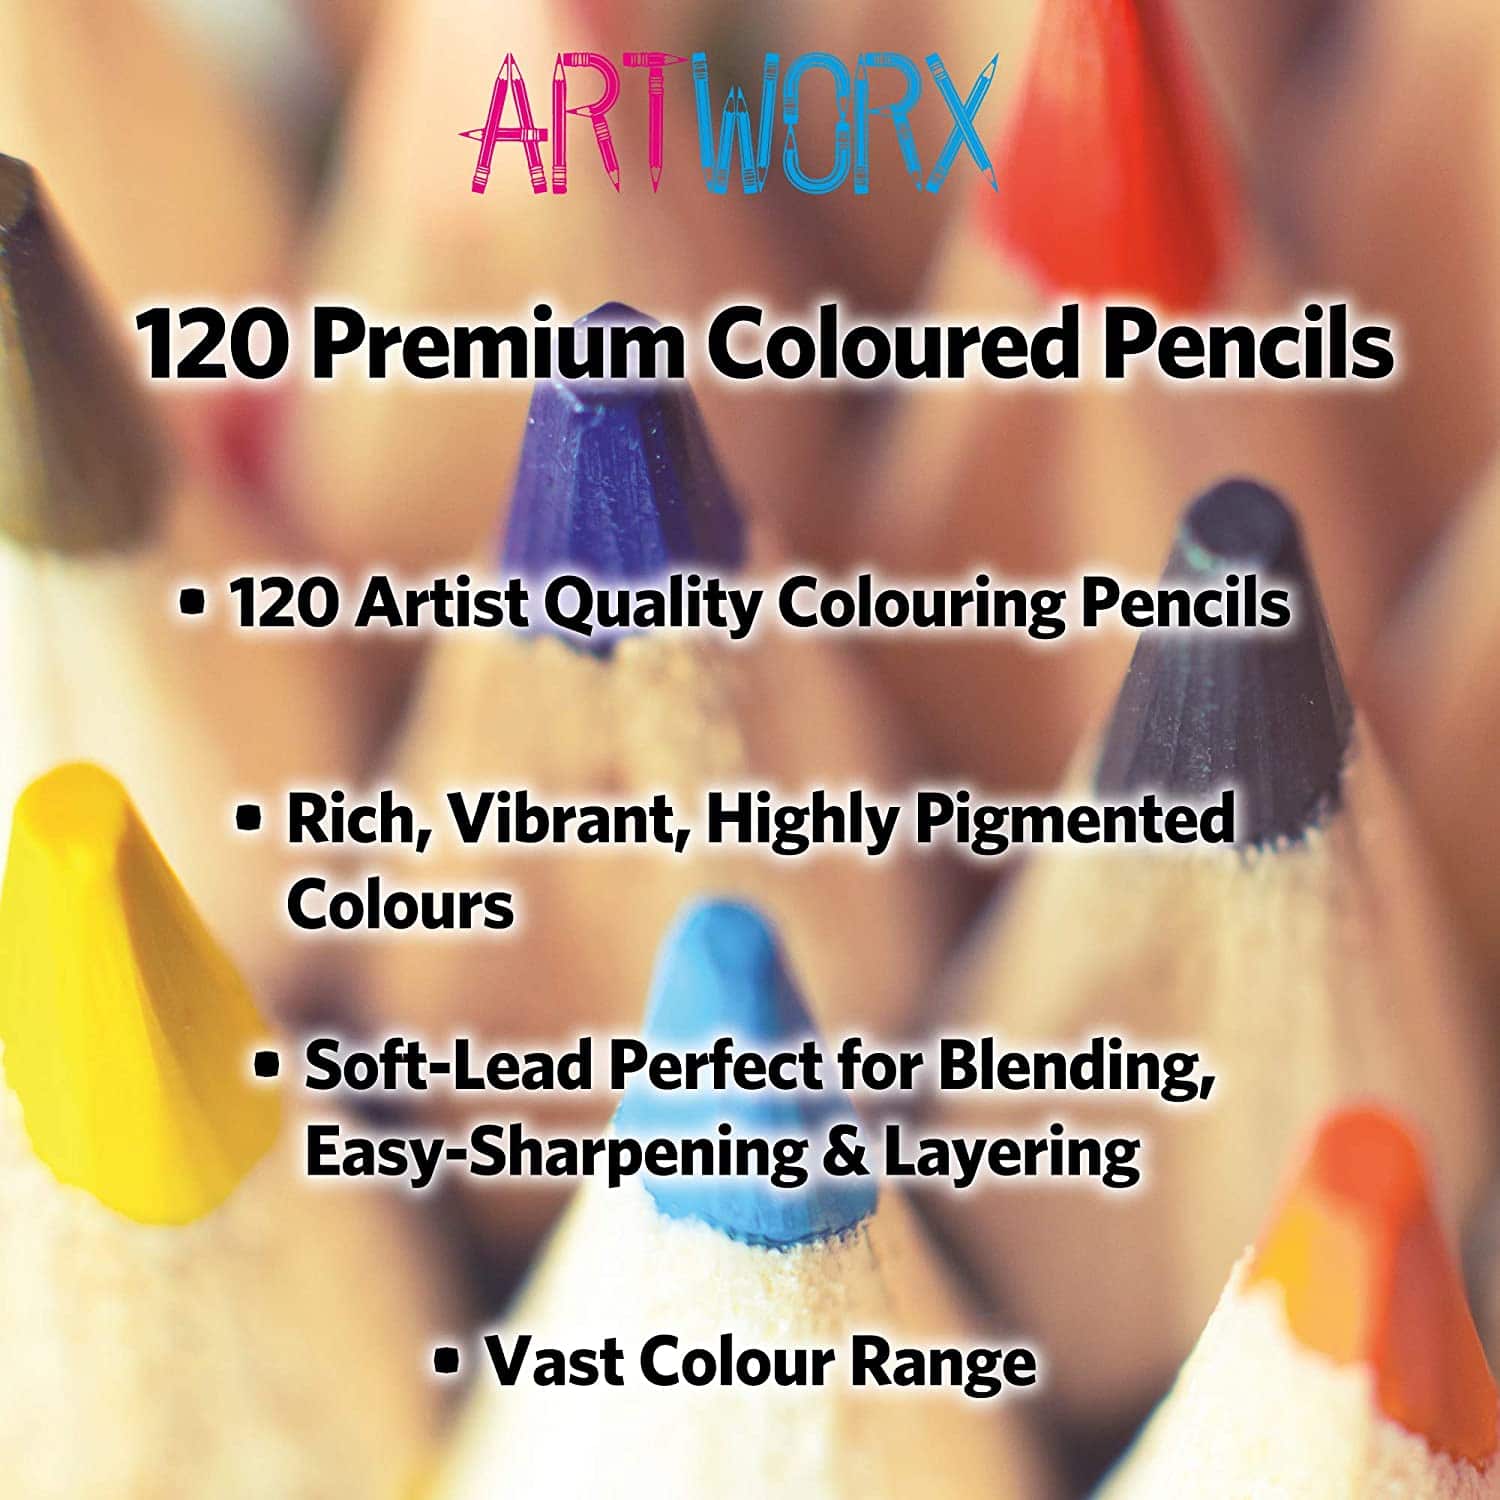 Artworx Premium Artists Colouring Art Pencils specifications